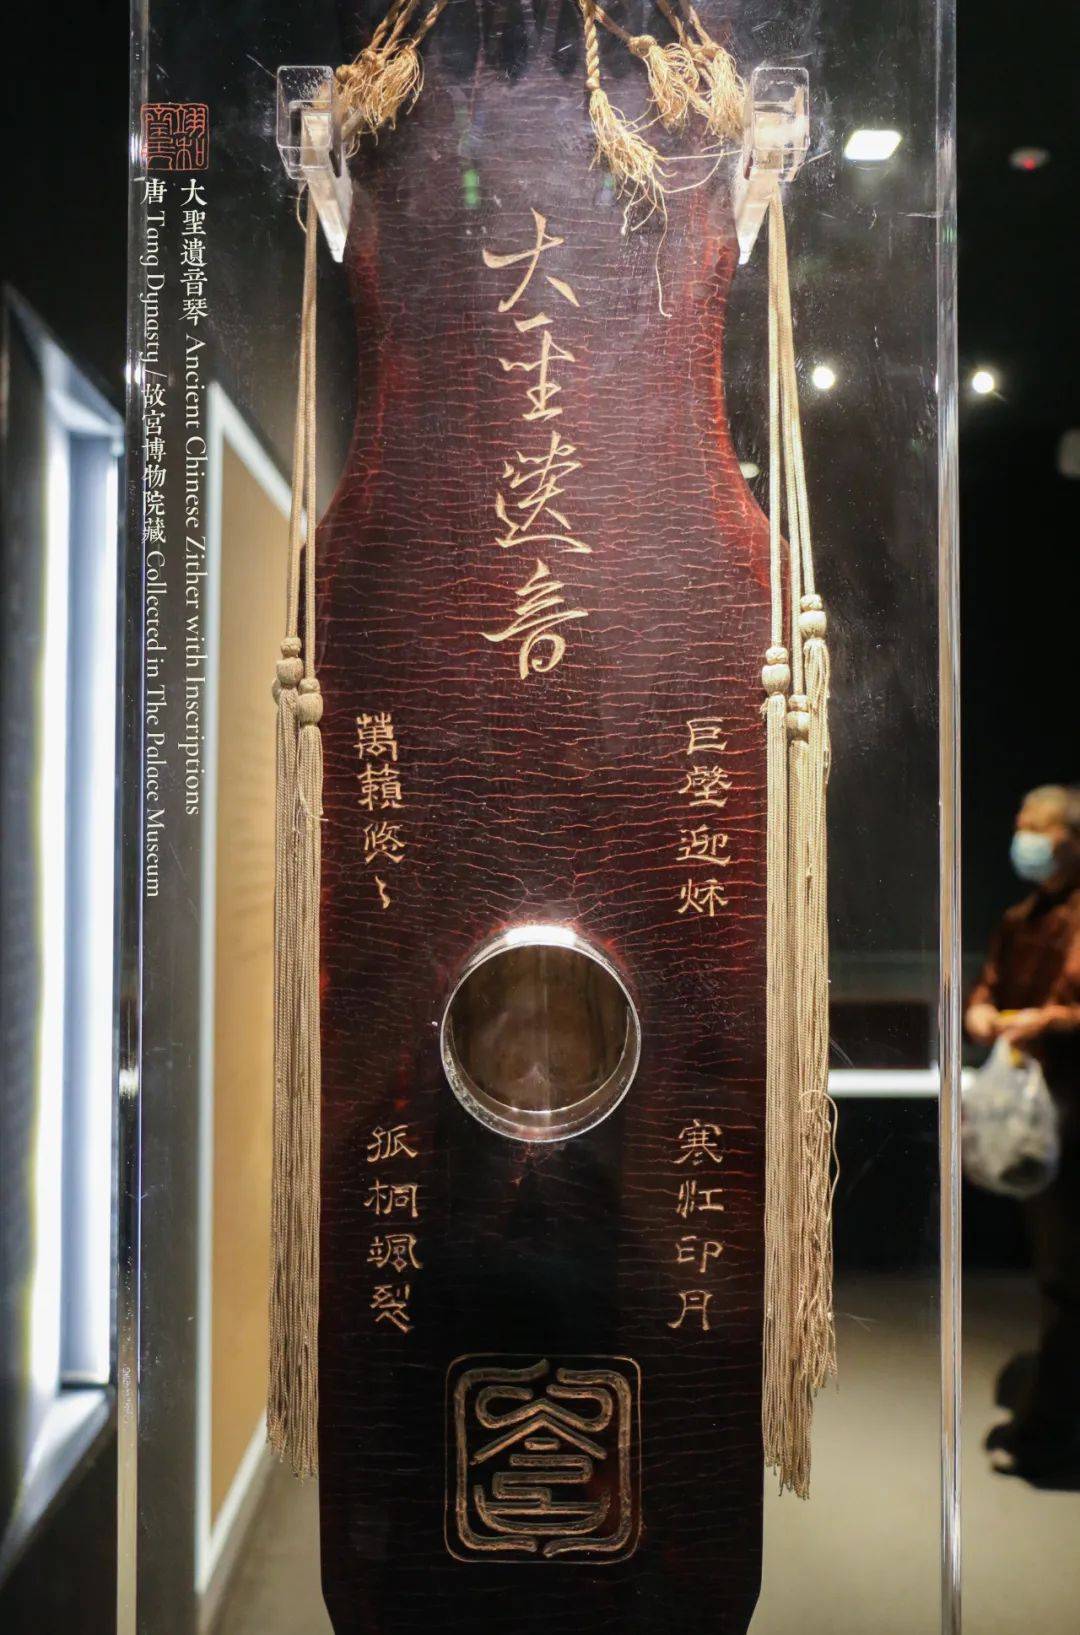 ♢中国古玩 清朝末 民国時代初期 龍紋様 透かし彫り細工喇叭 楽器 銅器